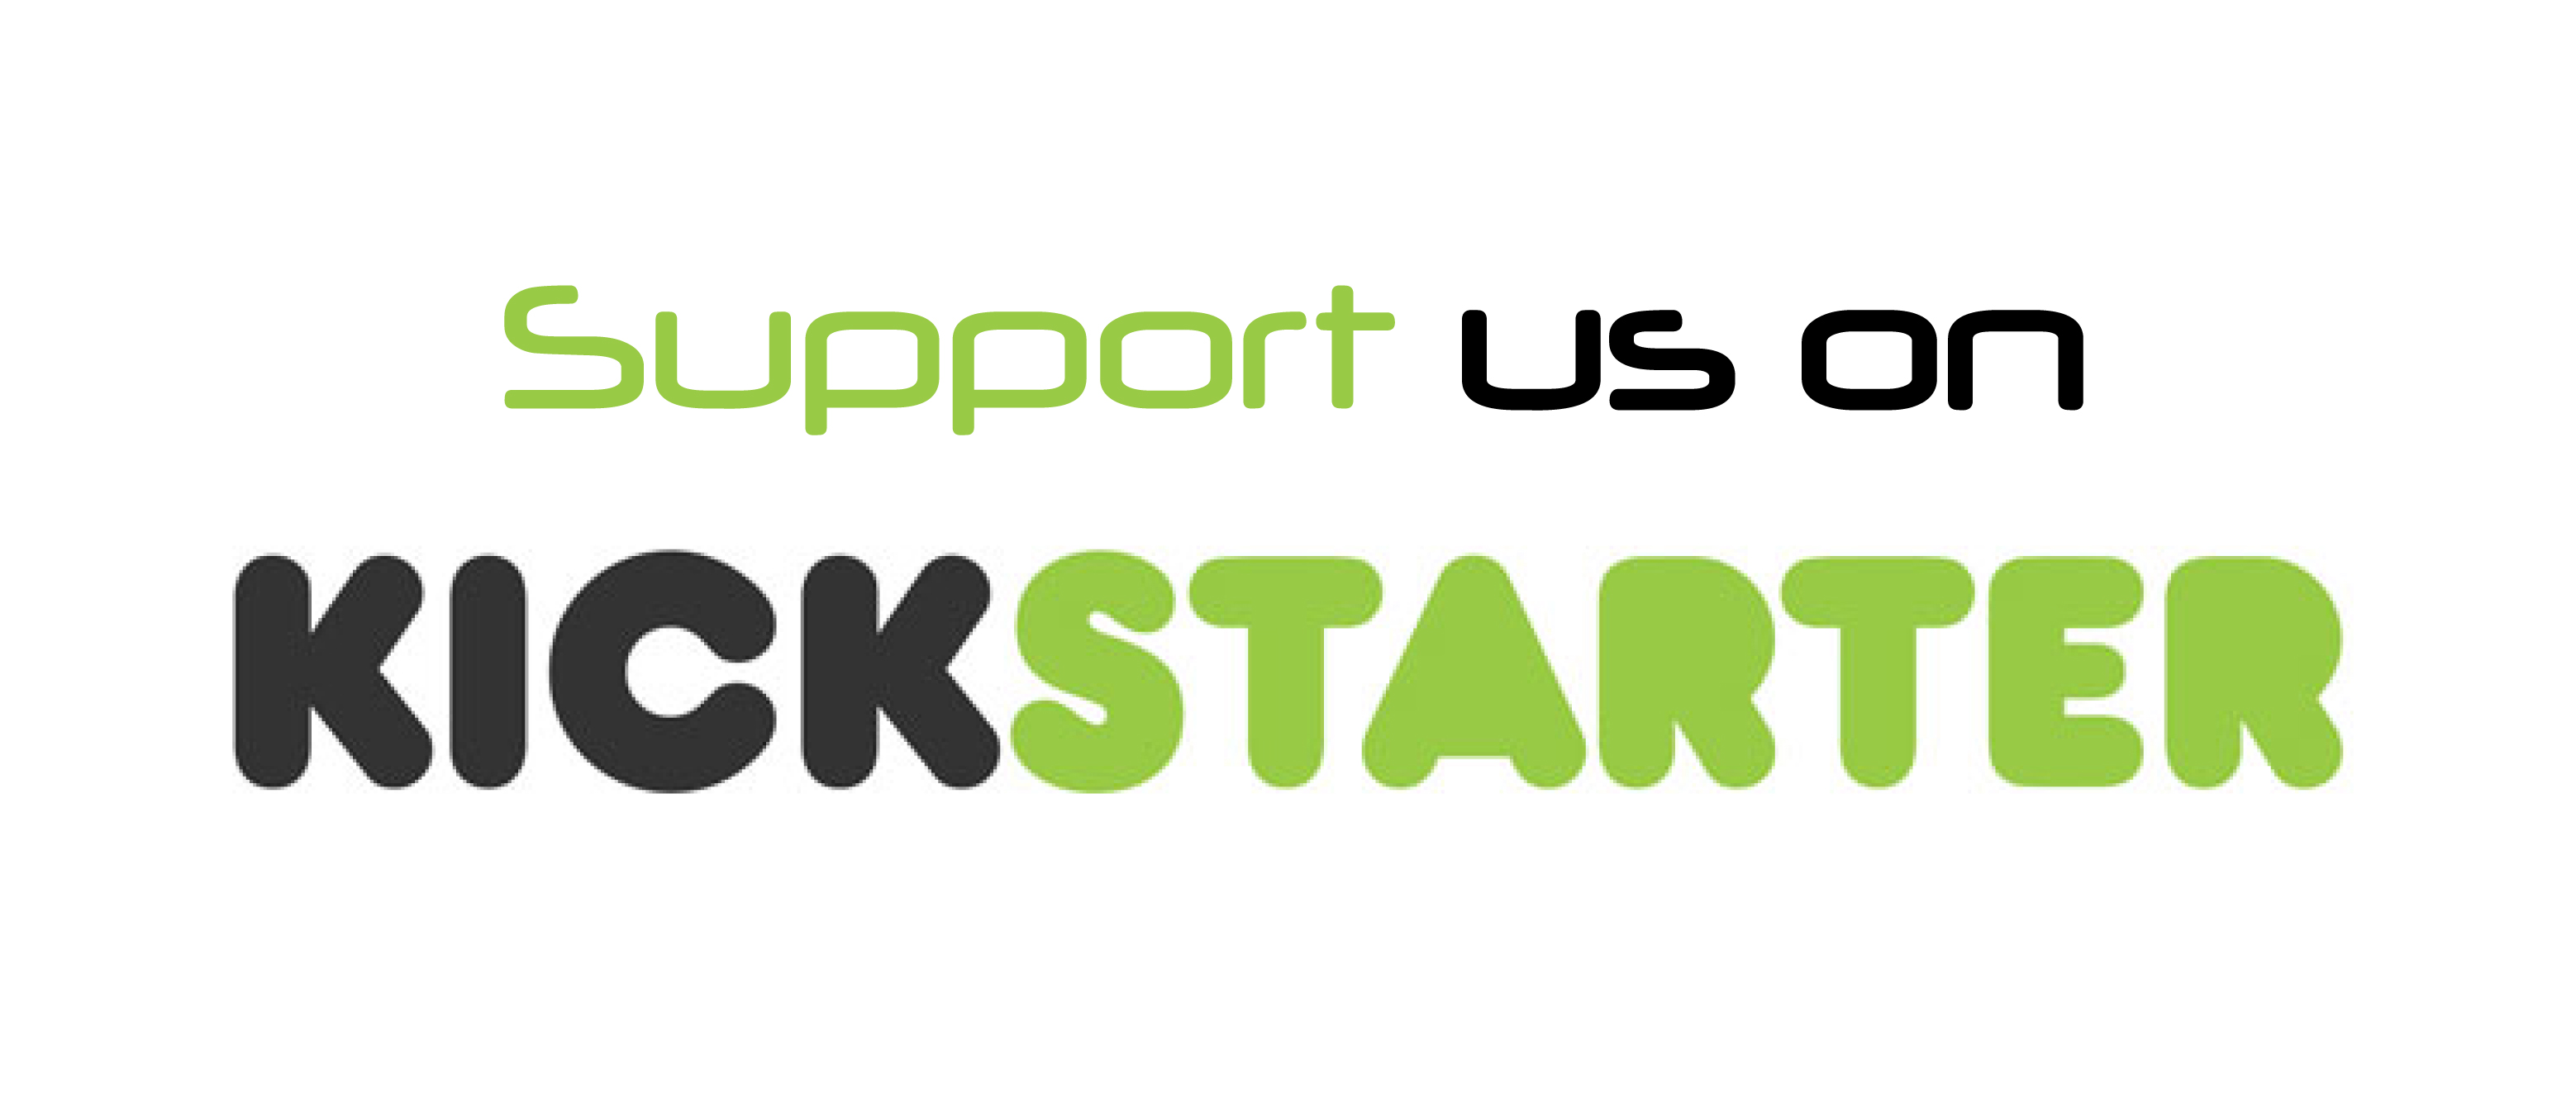 Neurodome_Kickstarter_Logo